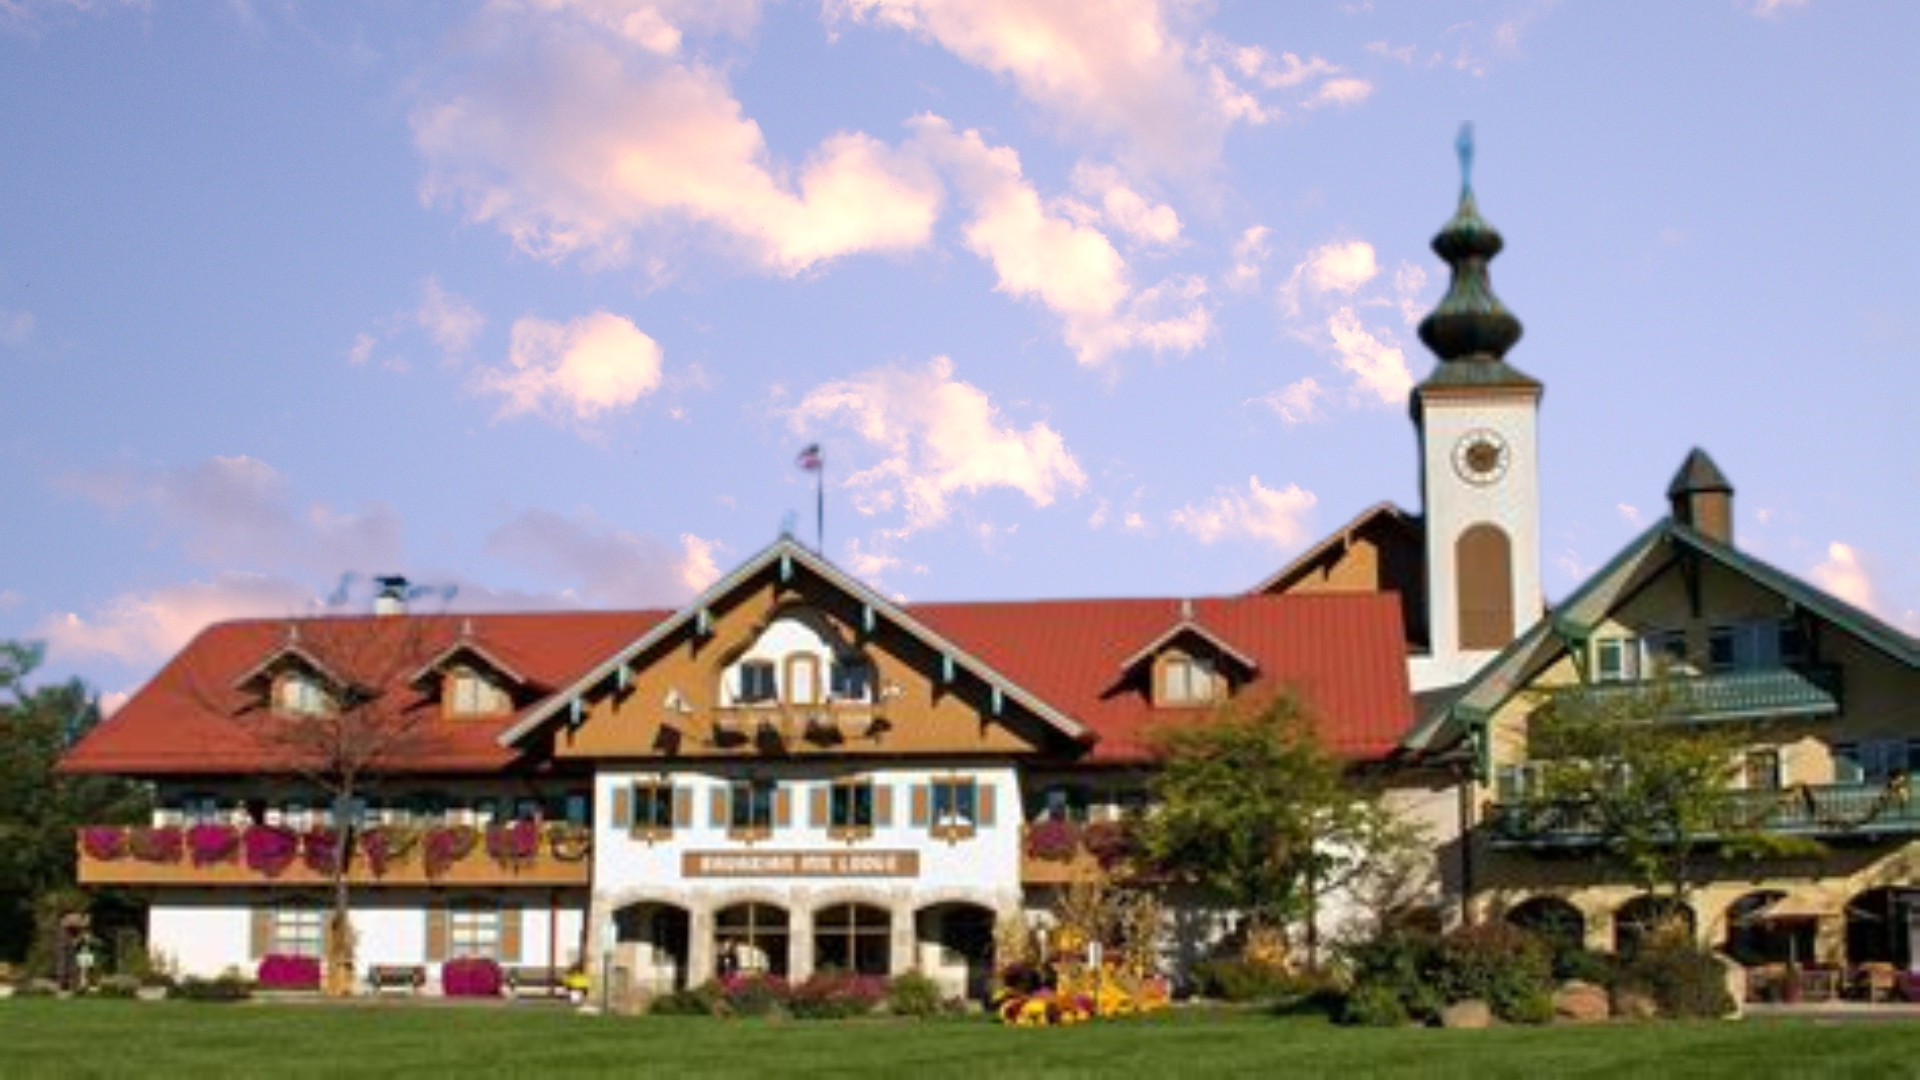 Starlight Tours at Bavarian inn, Frankenmuth, MI